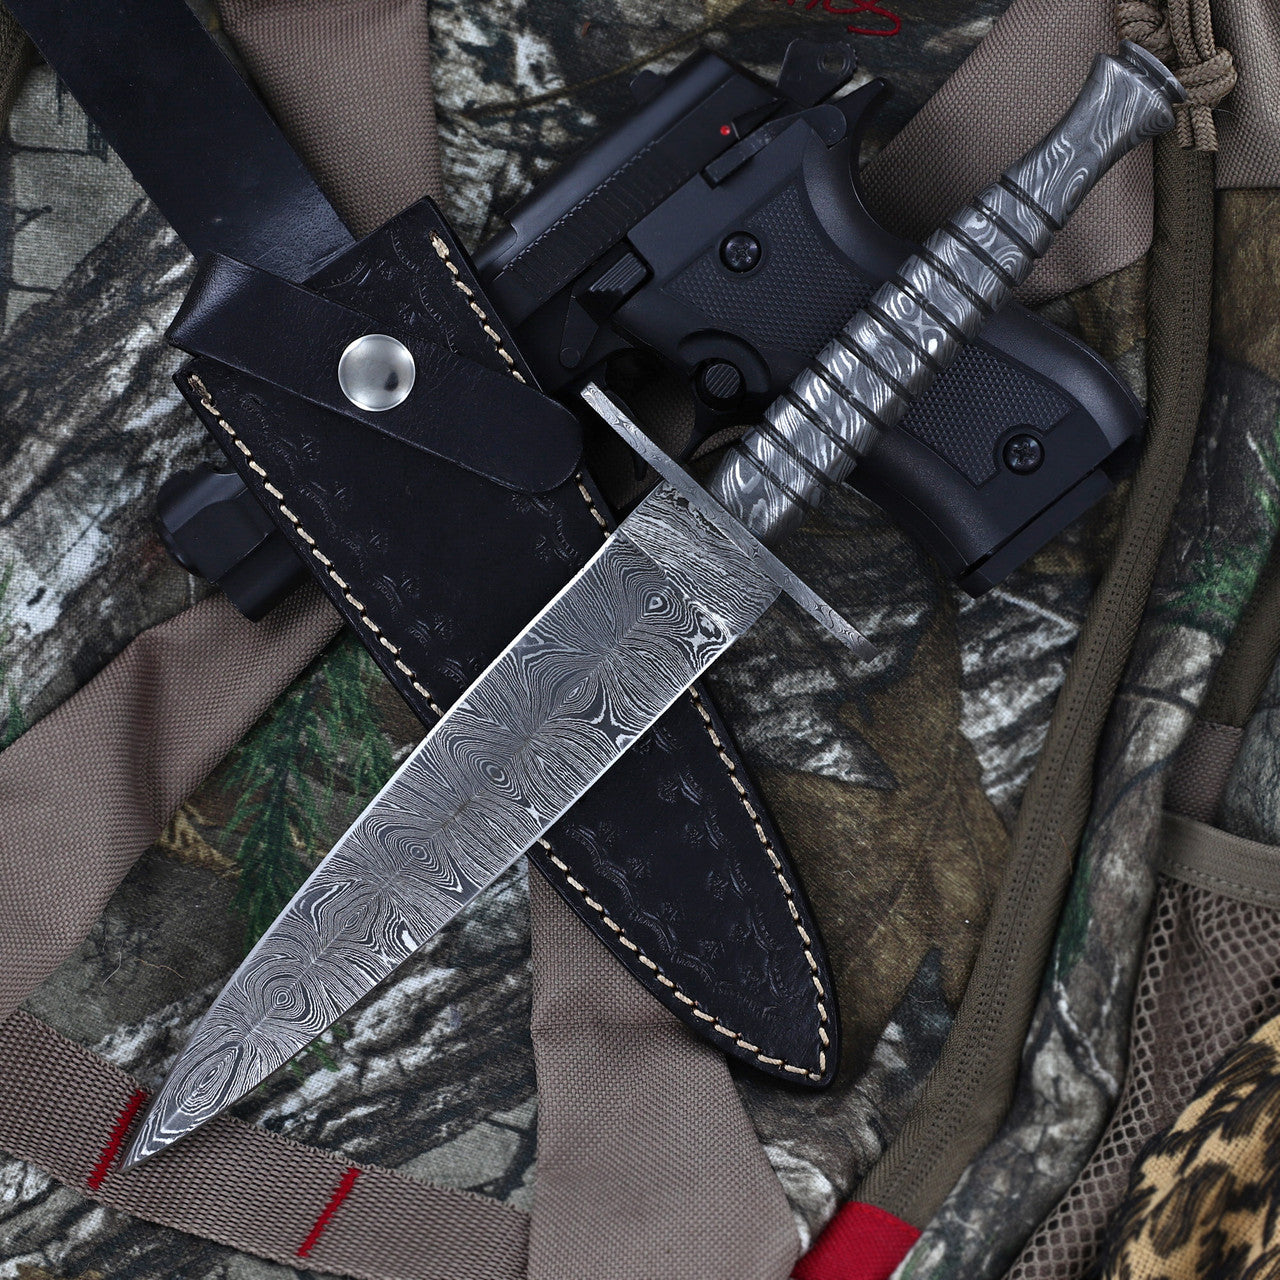 Full Damascus Steel Commando Knife with Leather Sheath-4